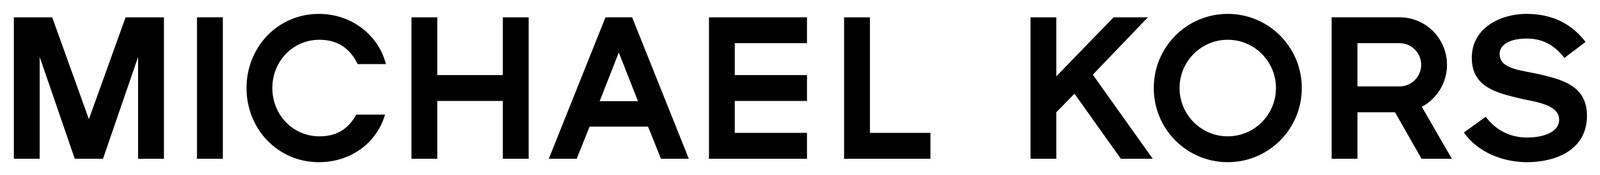 Michael_Kors_Logo.png